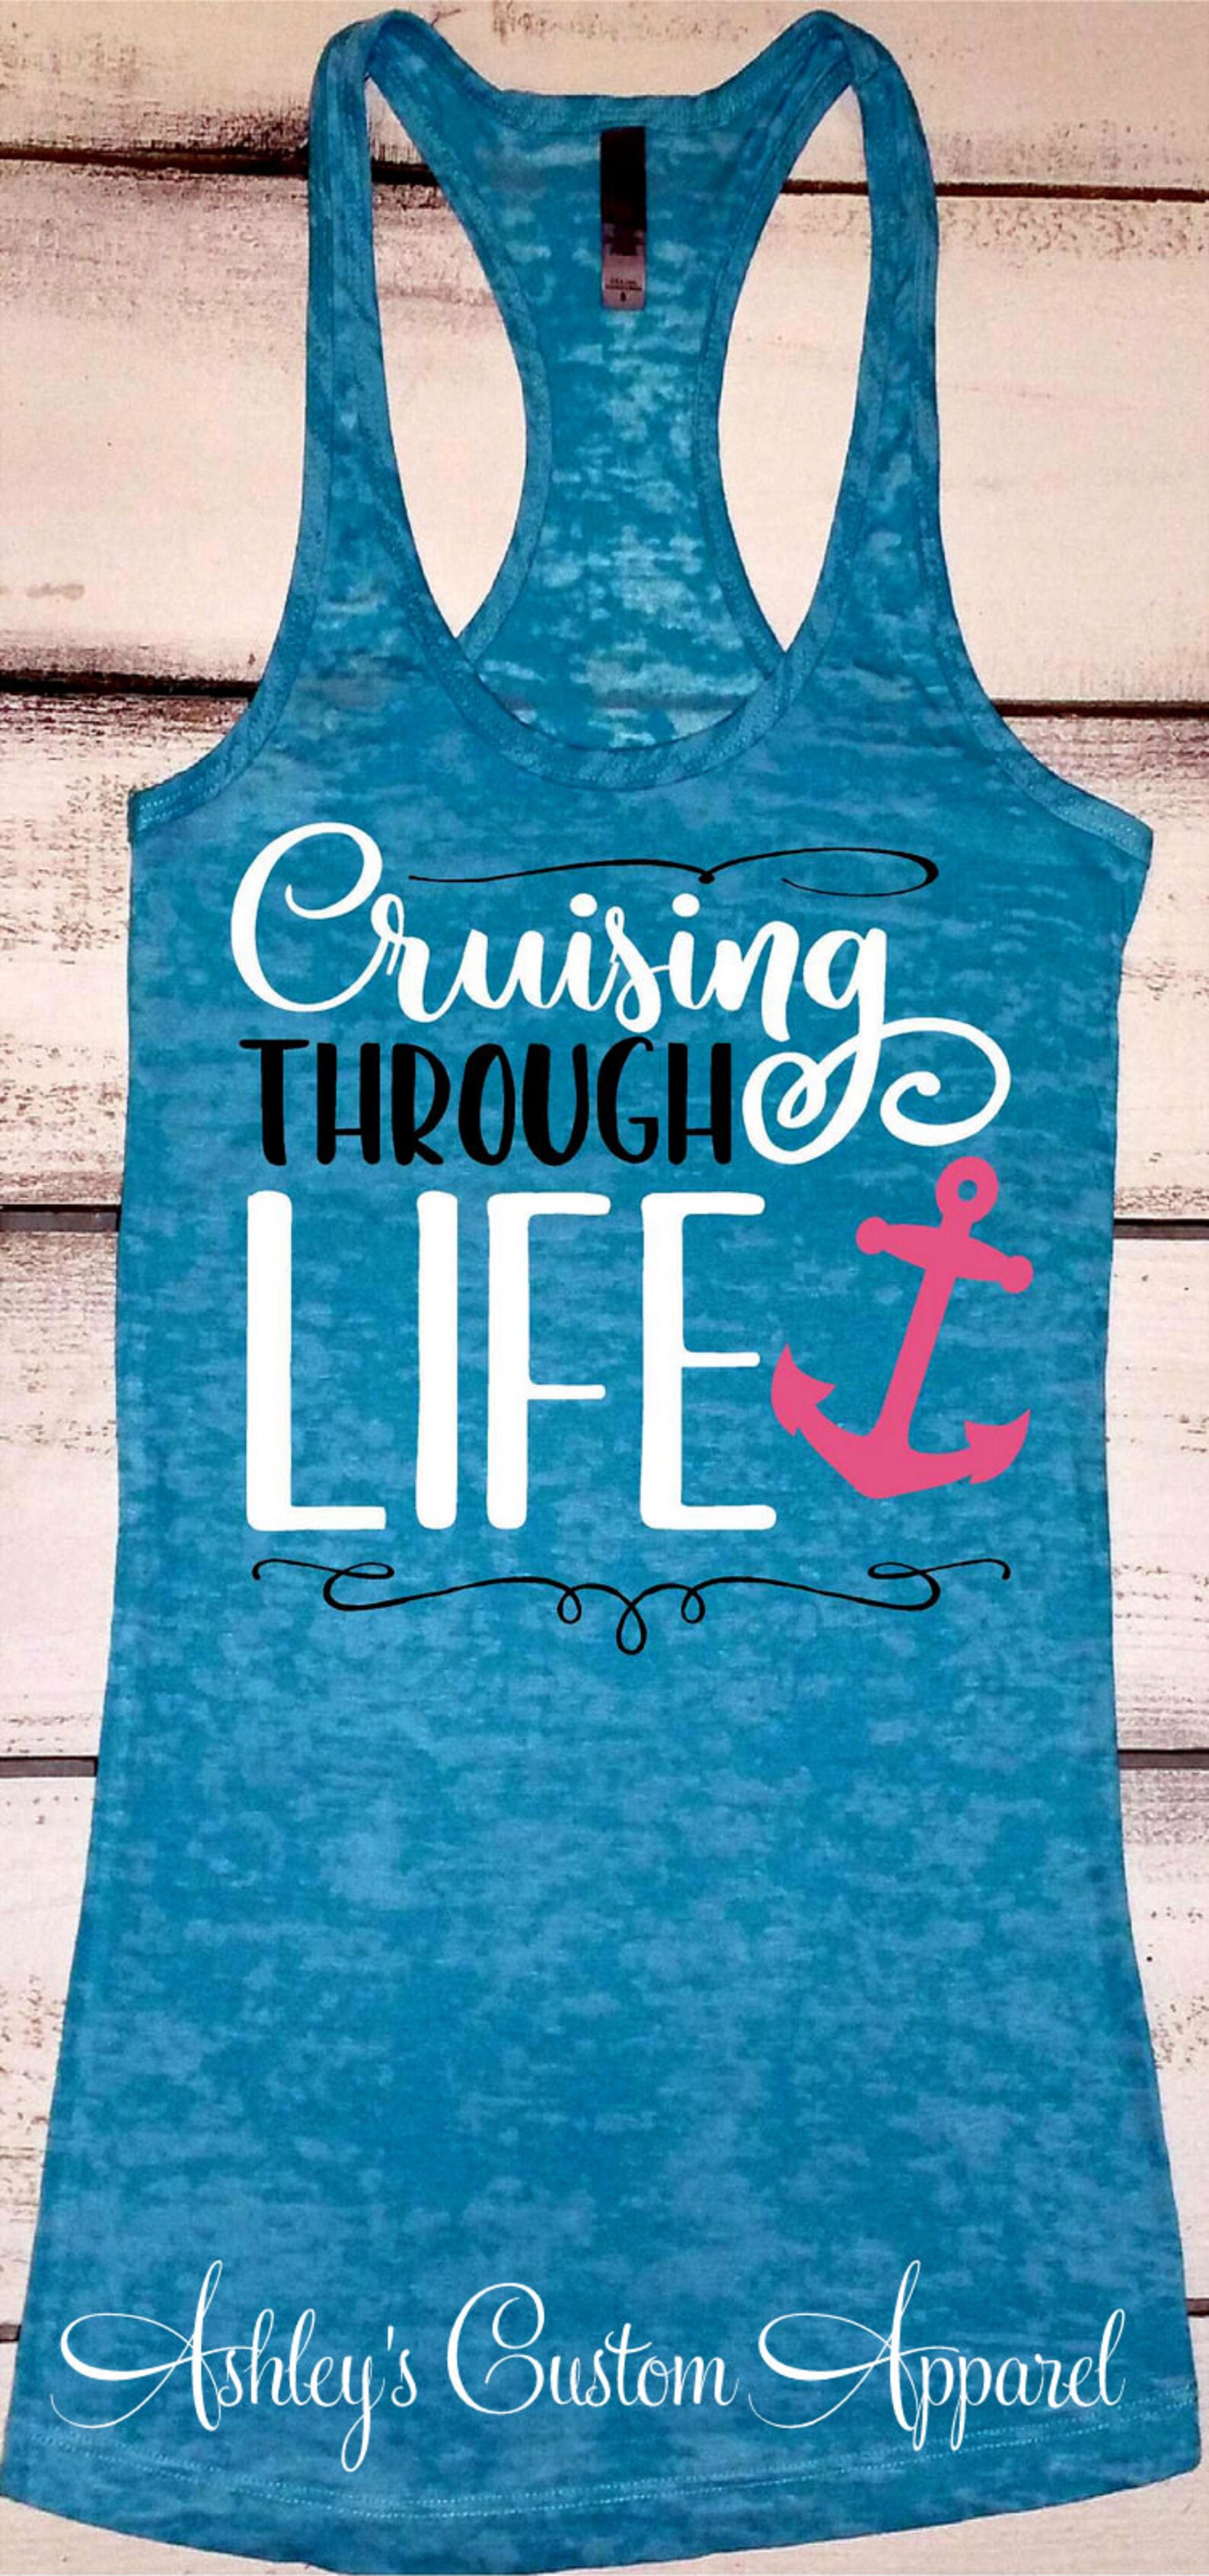 Cruise Shirts Cruising Through Life Family Girls Trip Shirts - Etsy